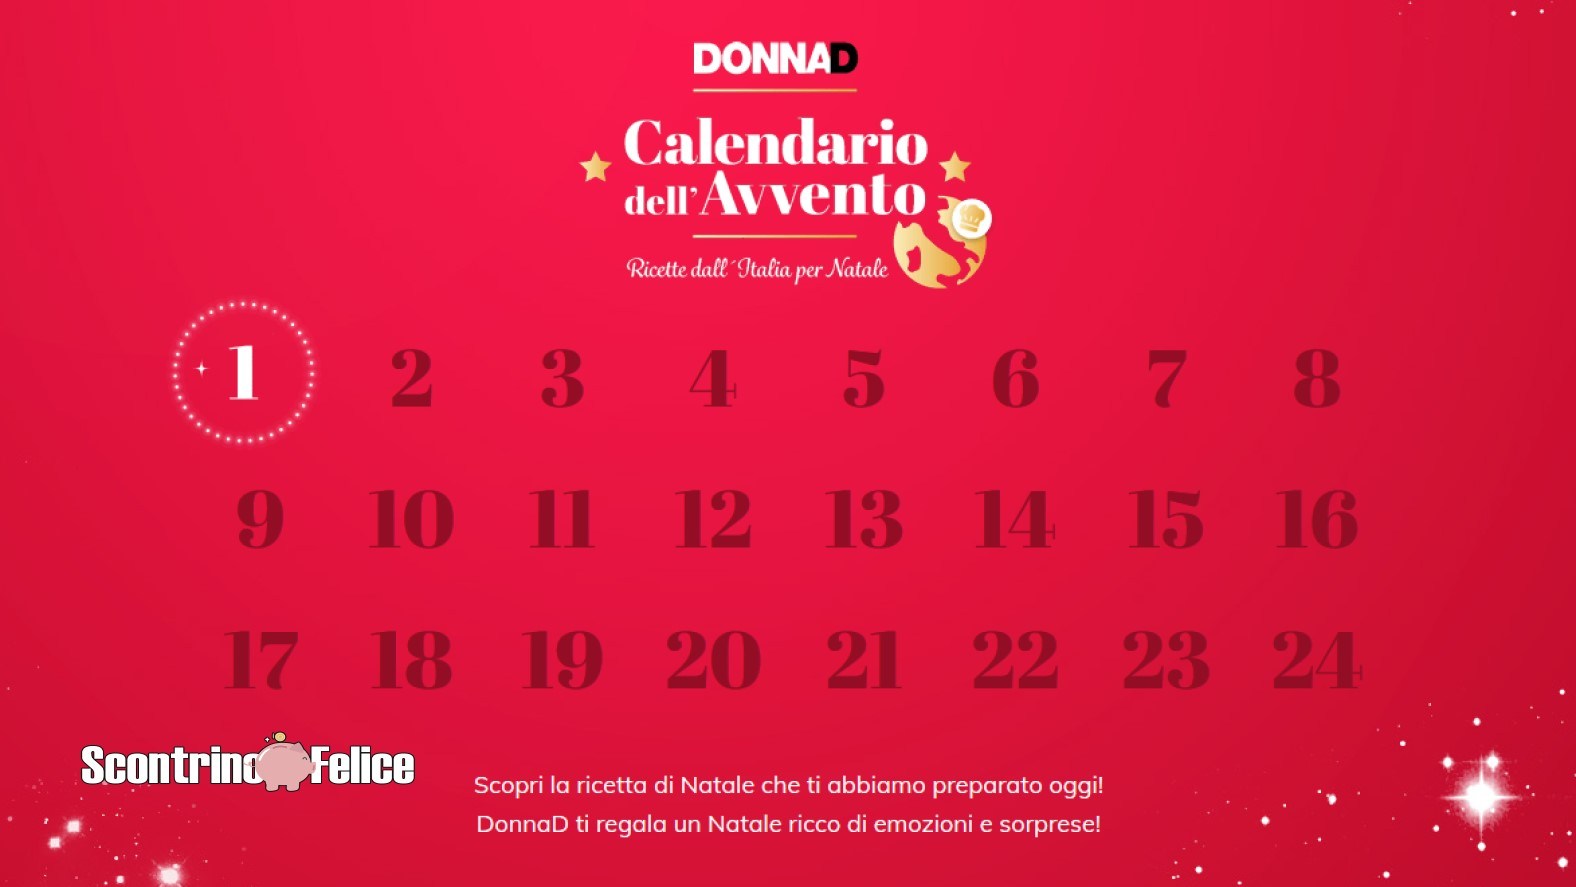 Calendario dell'Avvento Donna D 2020